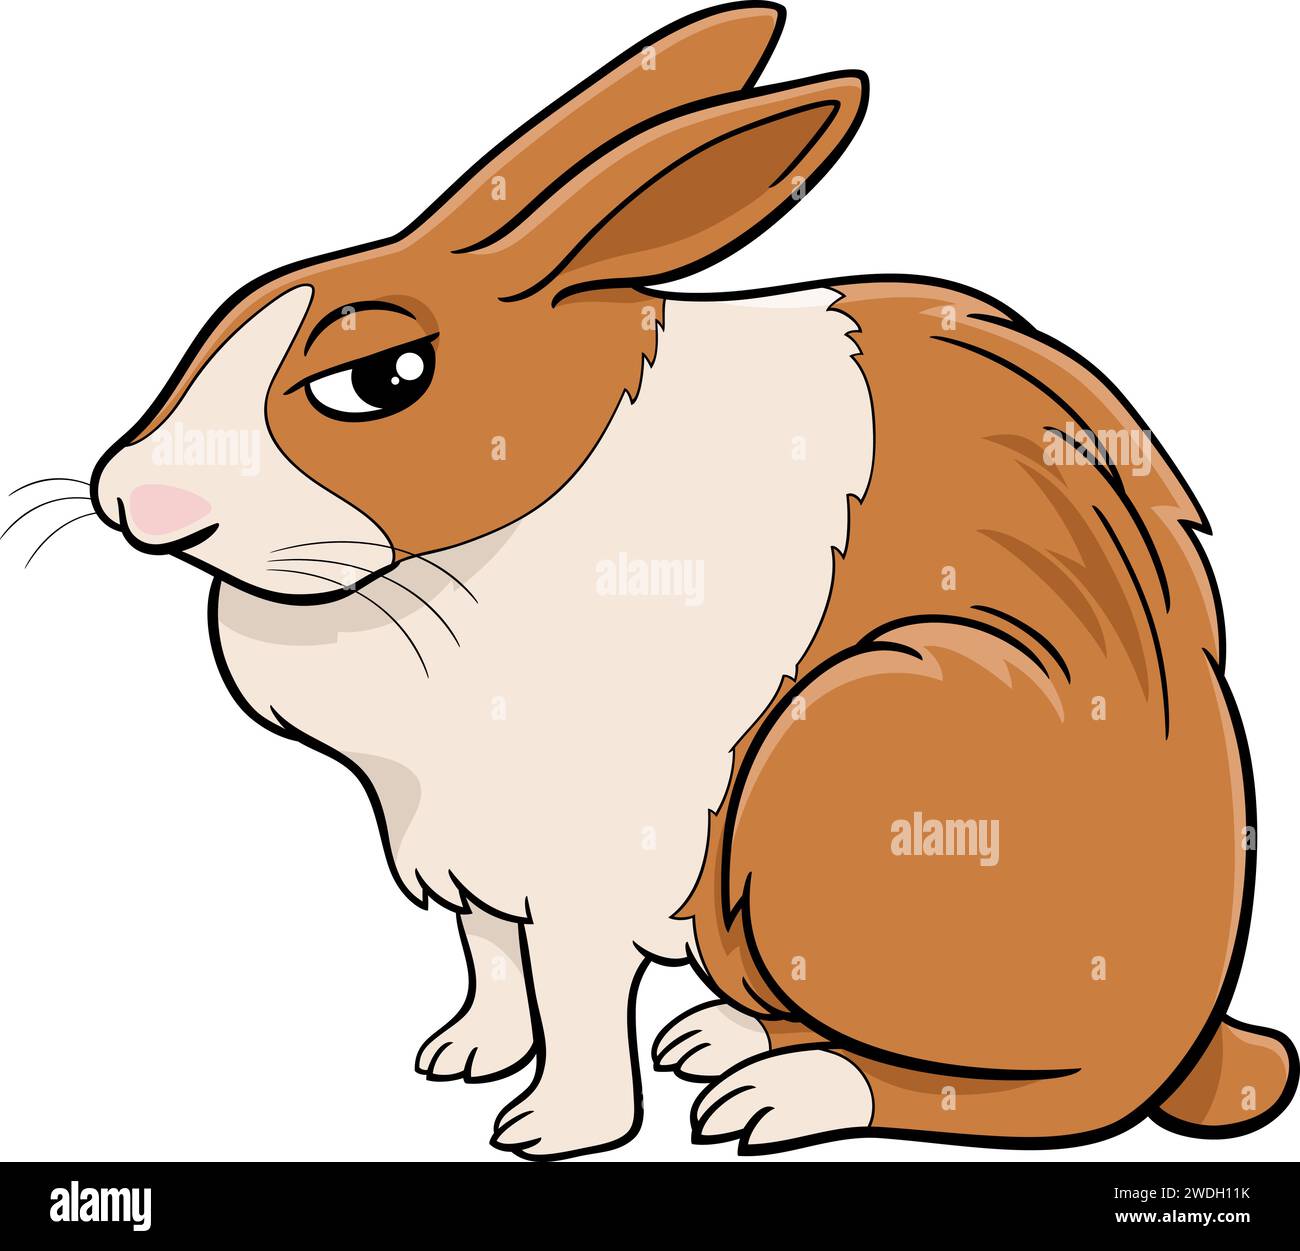 Comic-Illustration einer lustigen sitzenden Miniatur-Kaninchen-Comic-Tierfigur Stock Vektor